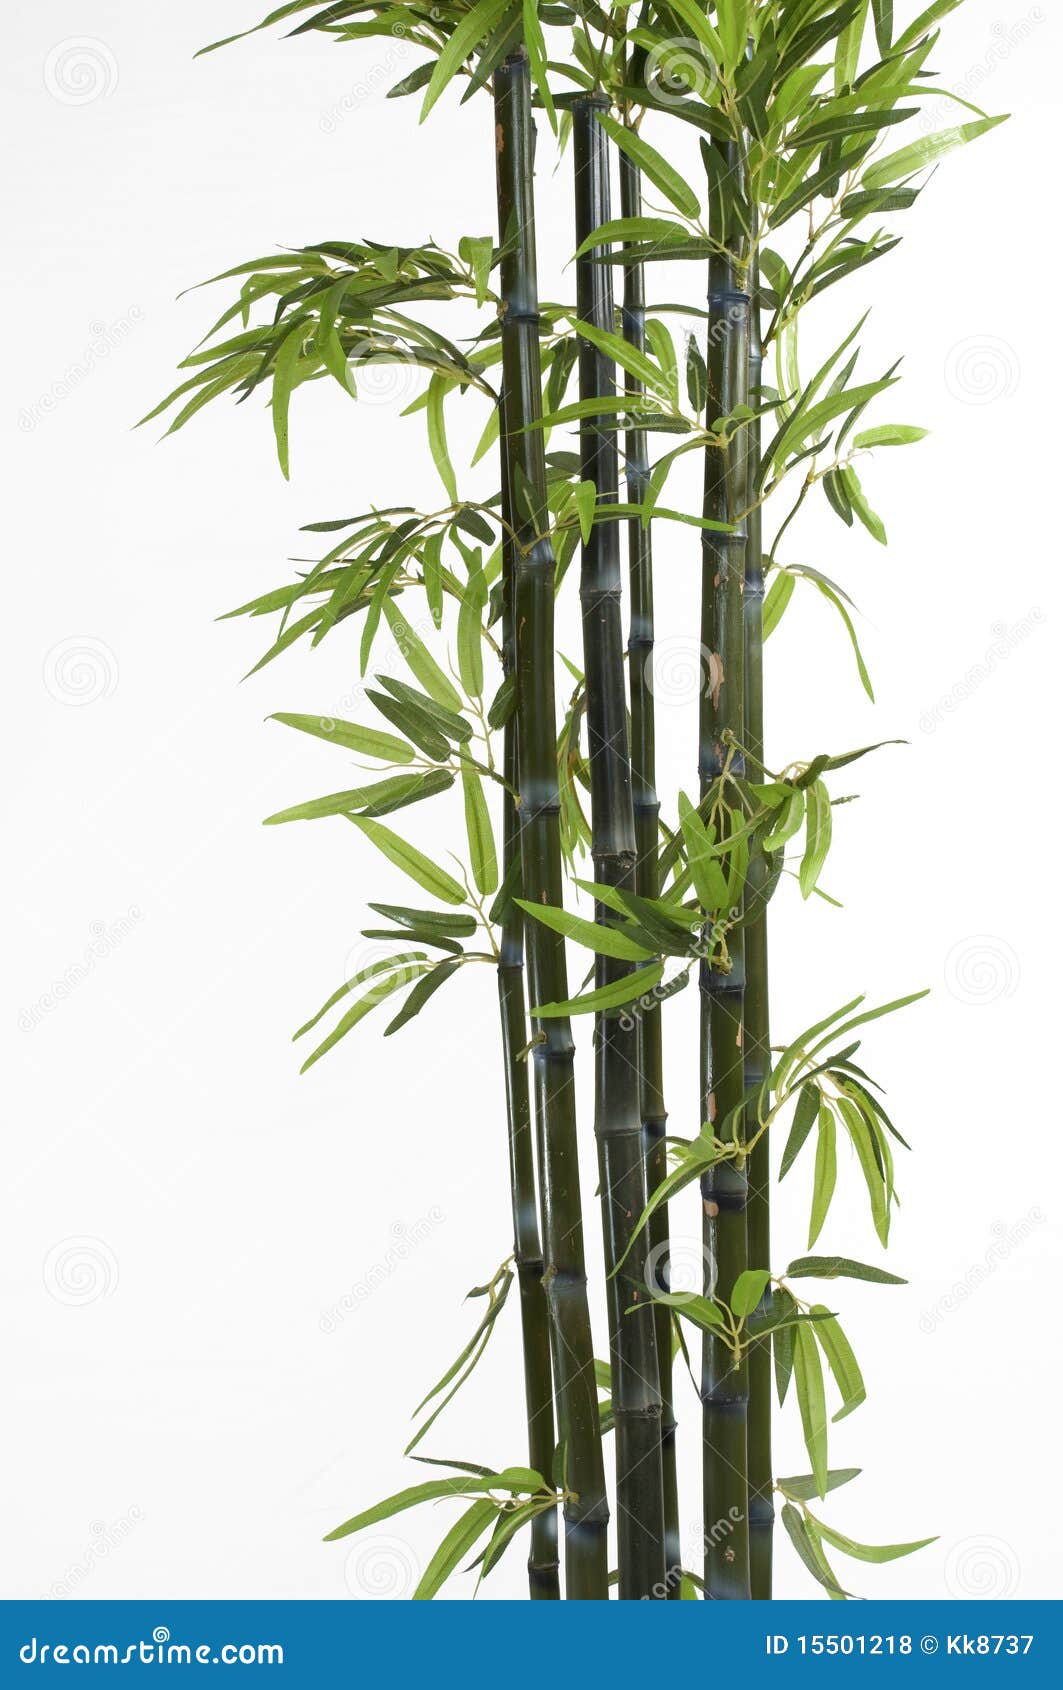 2,489 Bamboo Bud Stock Photos - Free & Royalty-Free Stock Photos